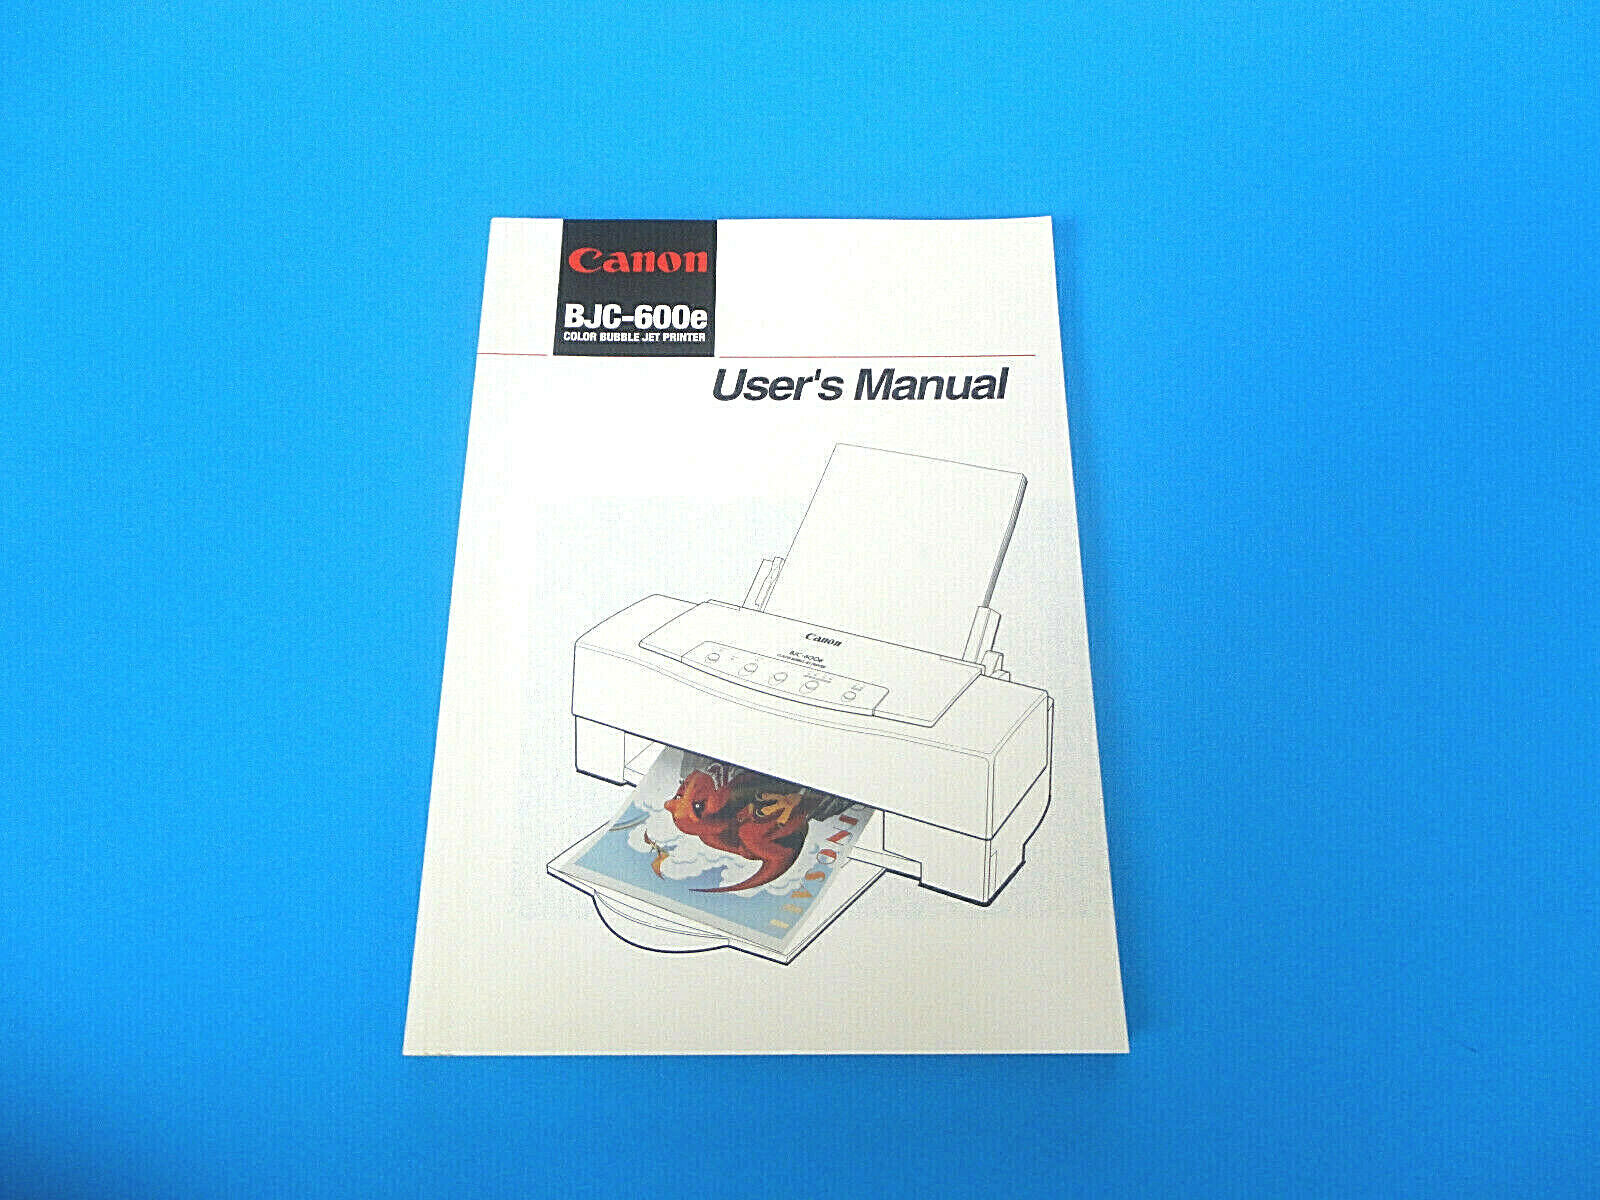  CANON BJC-600e Color Bubble Jet Printer User\'s Manual 1994